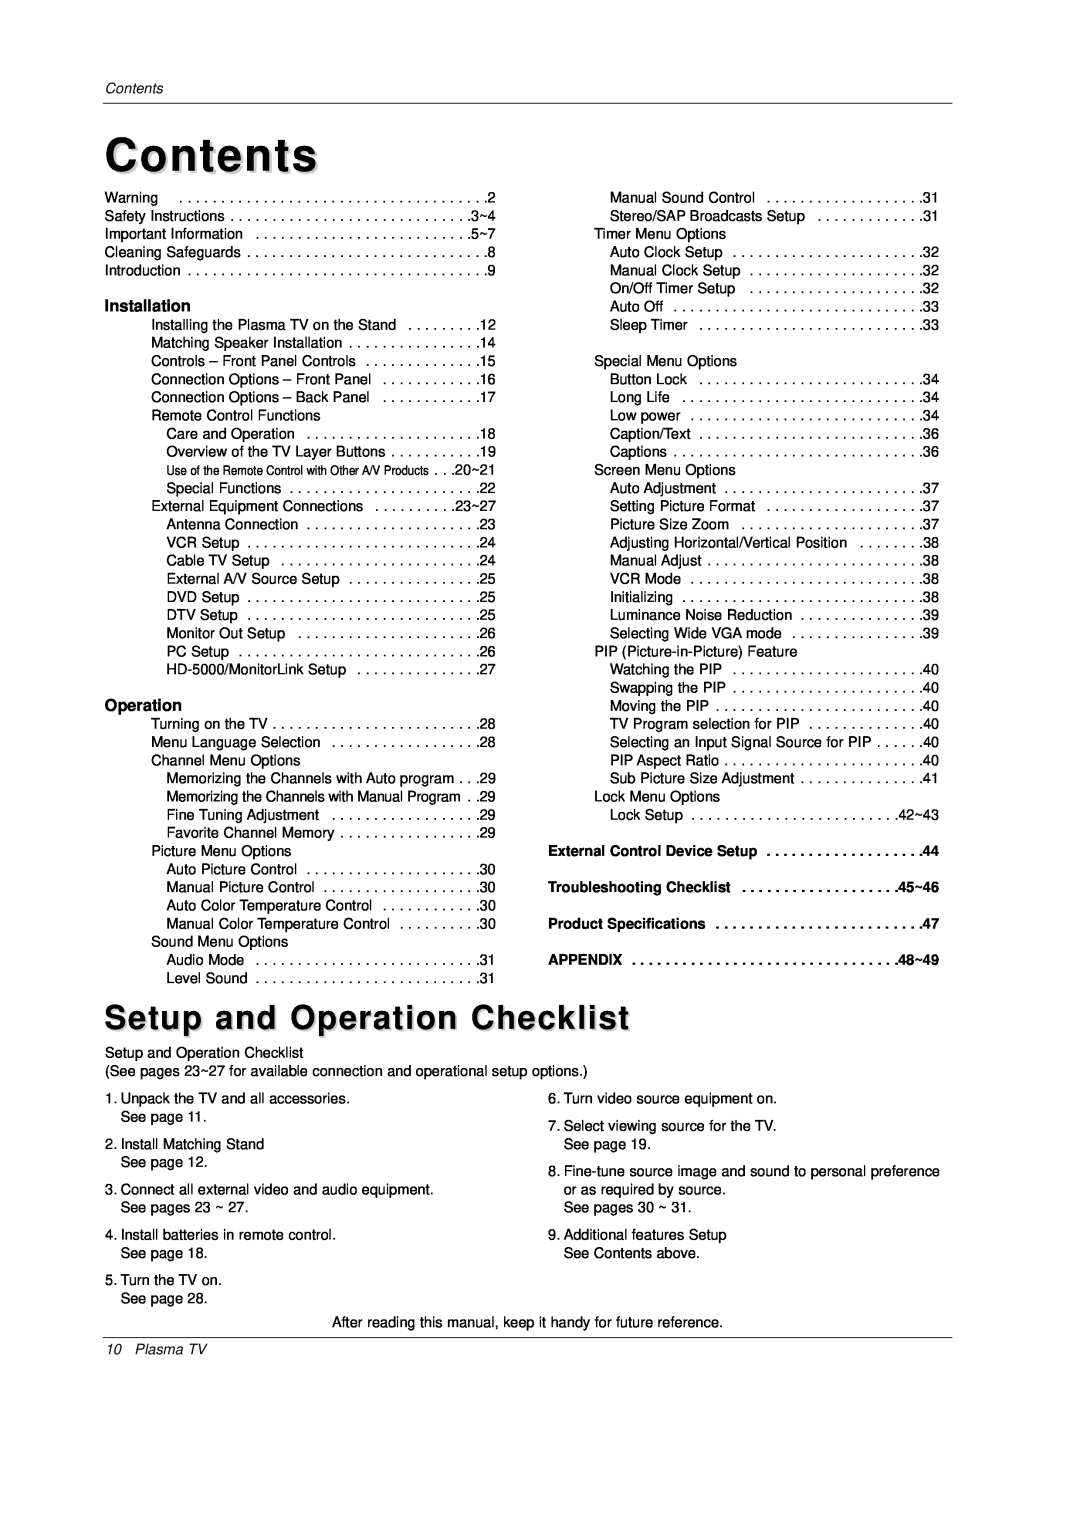 Mitsubishi Electronics PD-4225S manual Contents, Setup and Operation Checklist, Installation, External Control Device Setup 